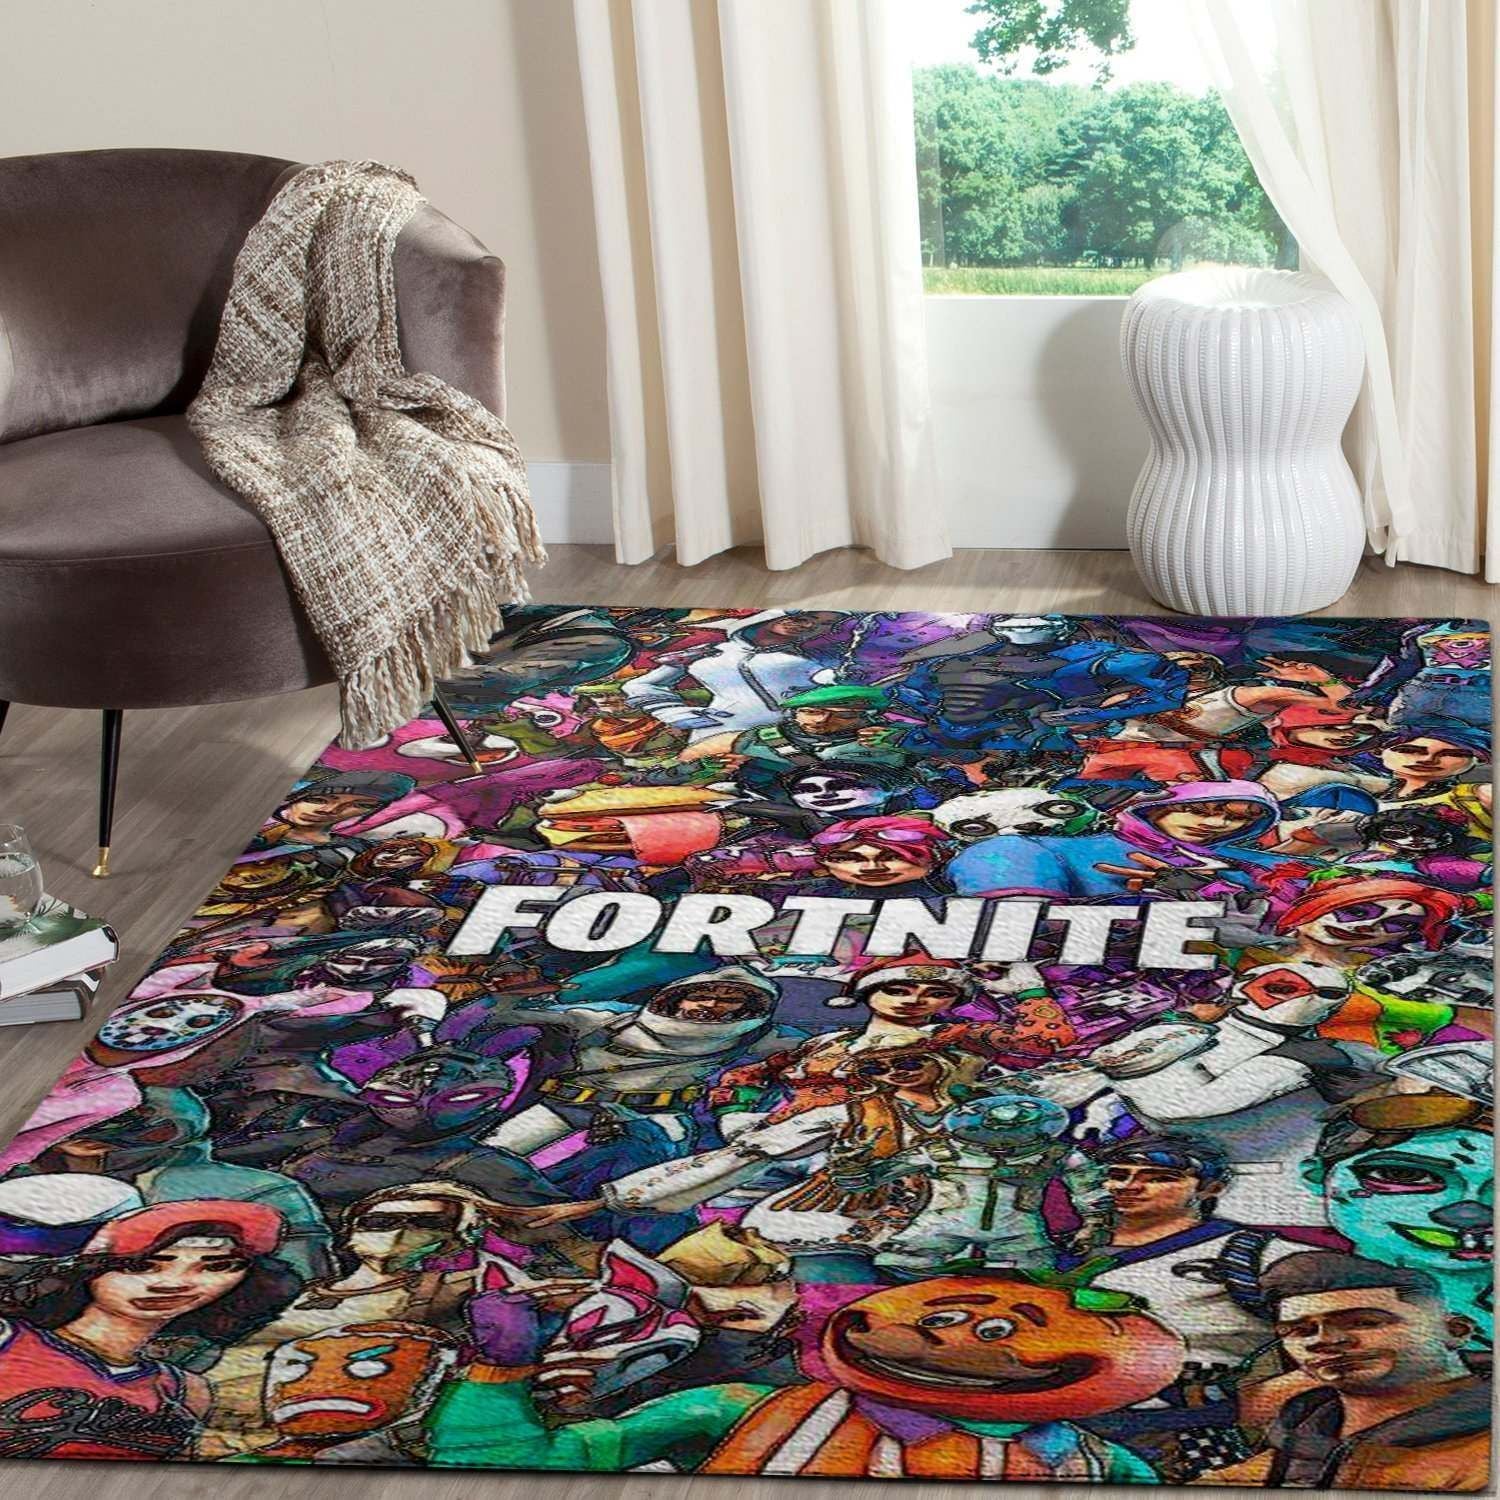 2Fa Epic Games Fortnite Area Rugs Carpet Mat Kitchen Rugs Floor Decor